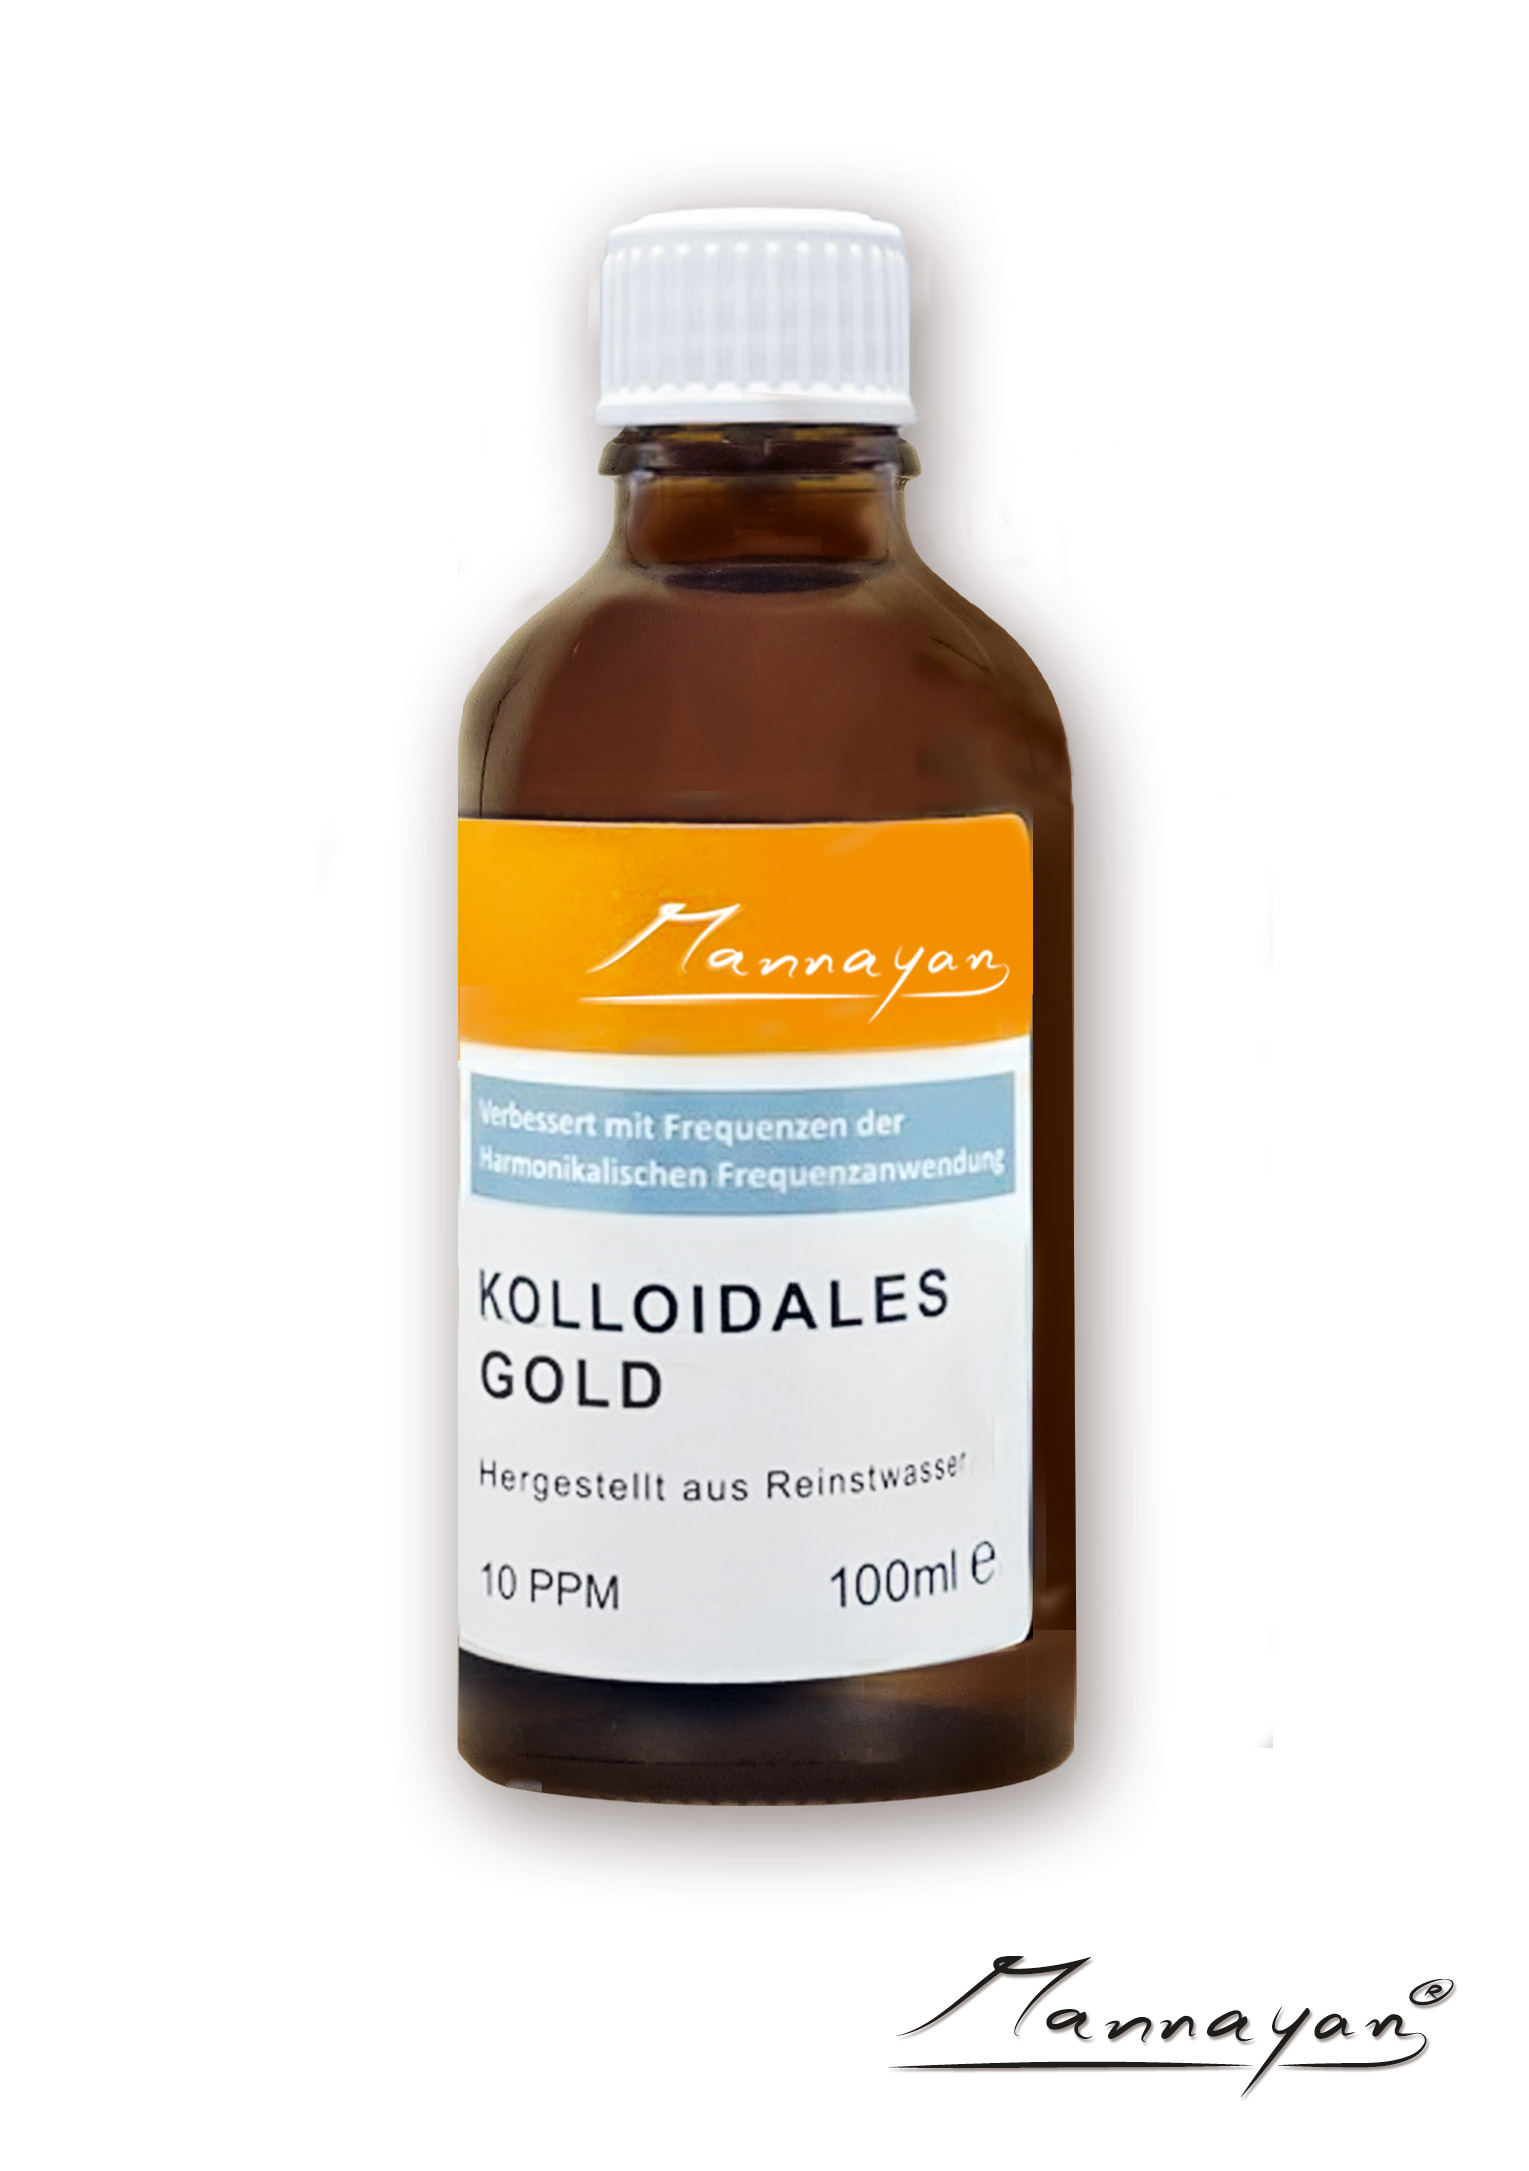 Mannayan Kolloidales Gold 100 ml